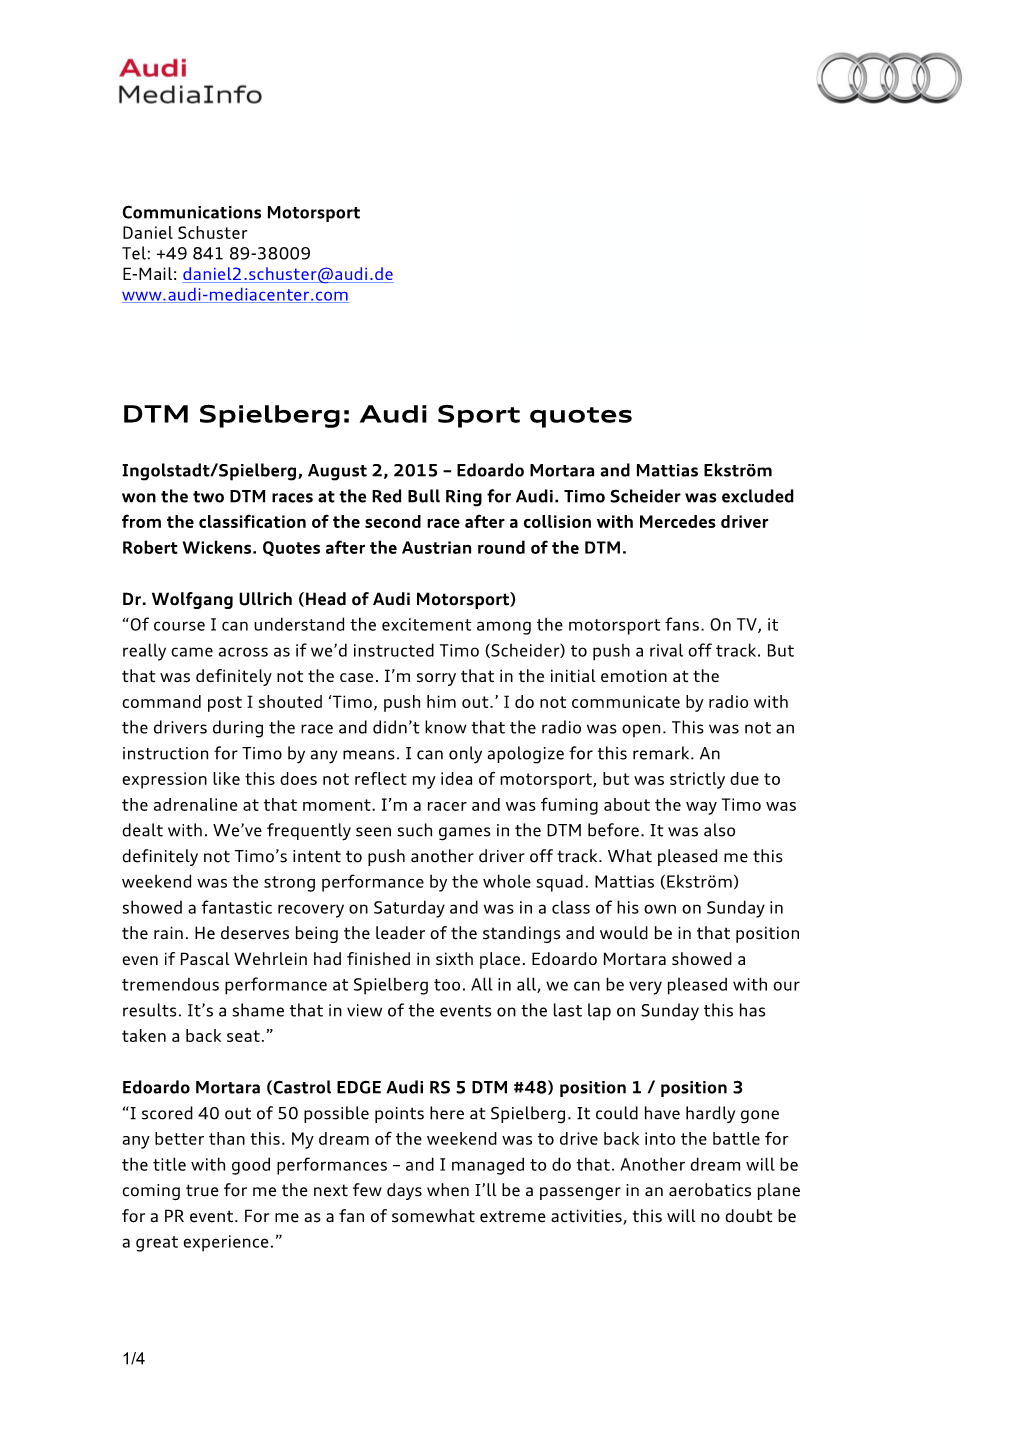 DTM Spielberg: Audi Sport Quotes